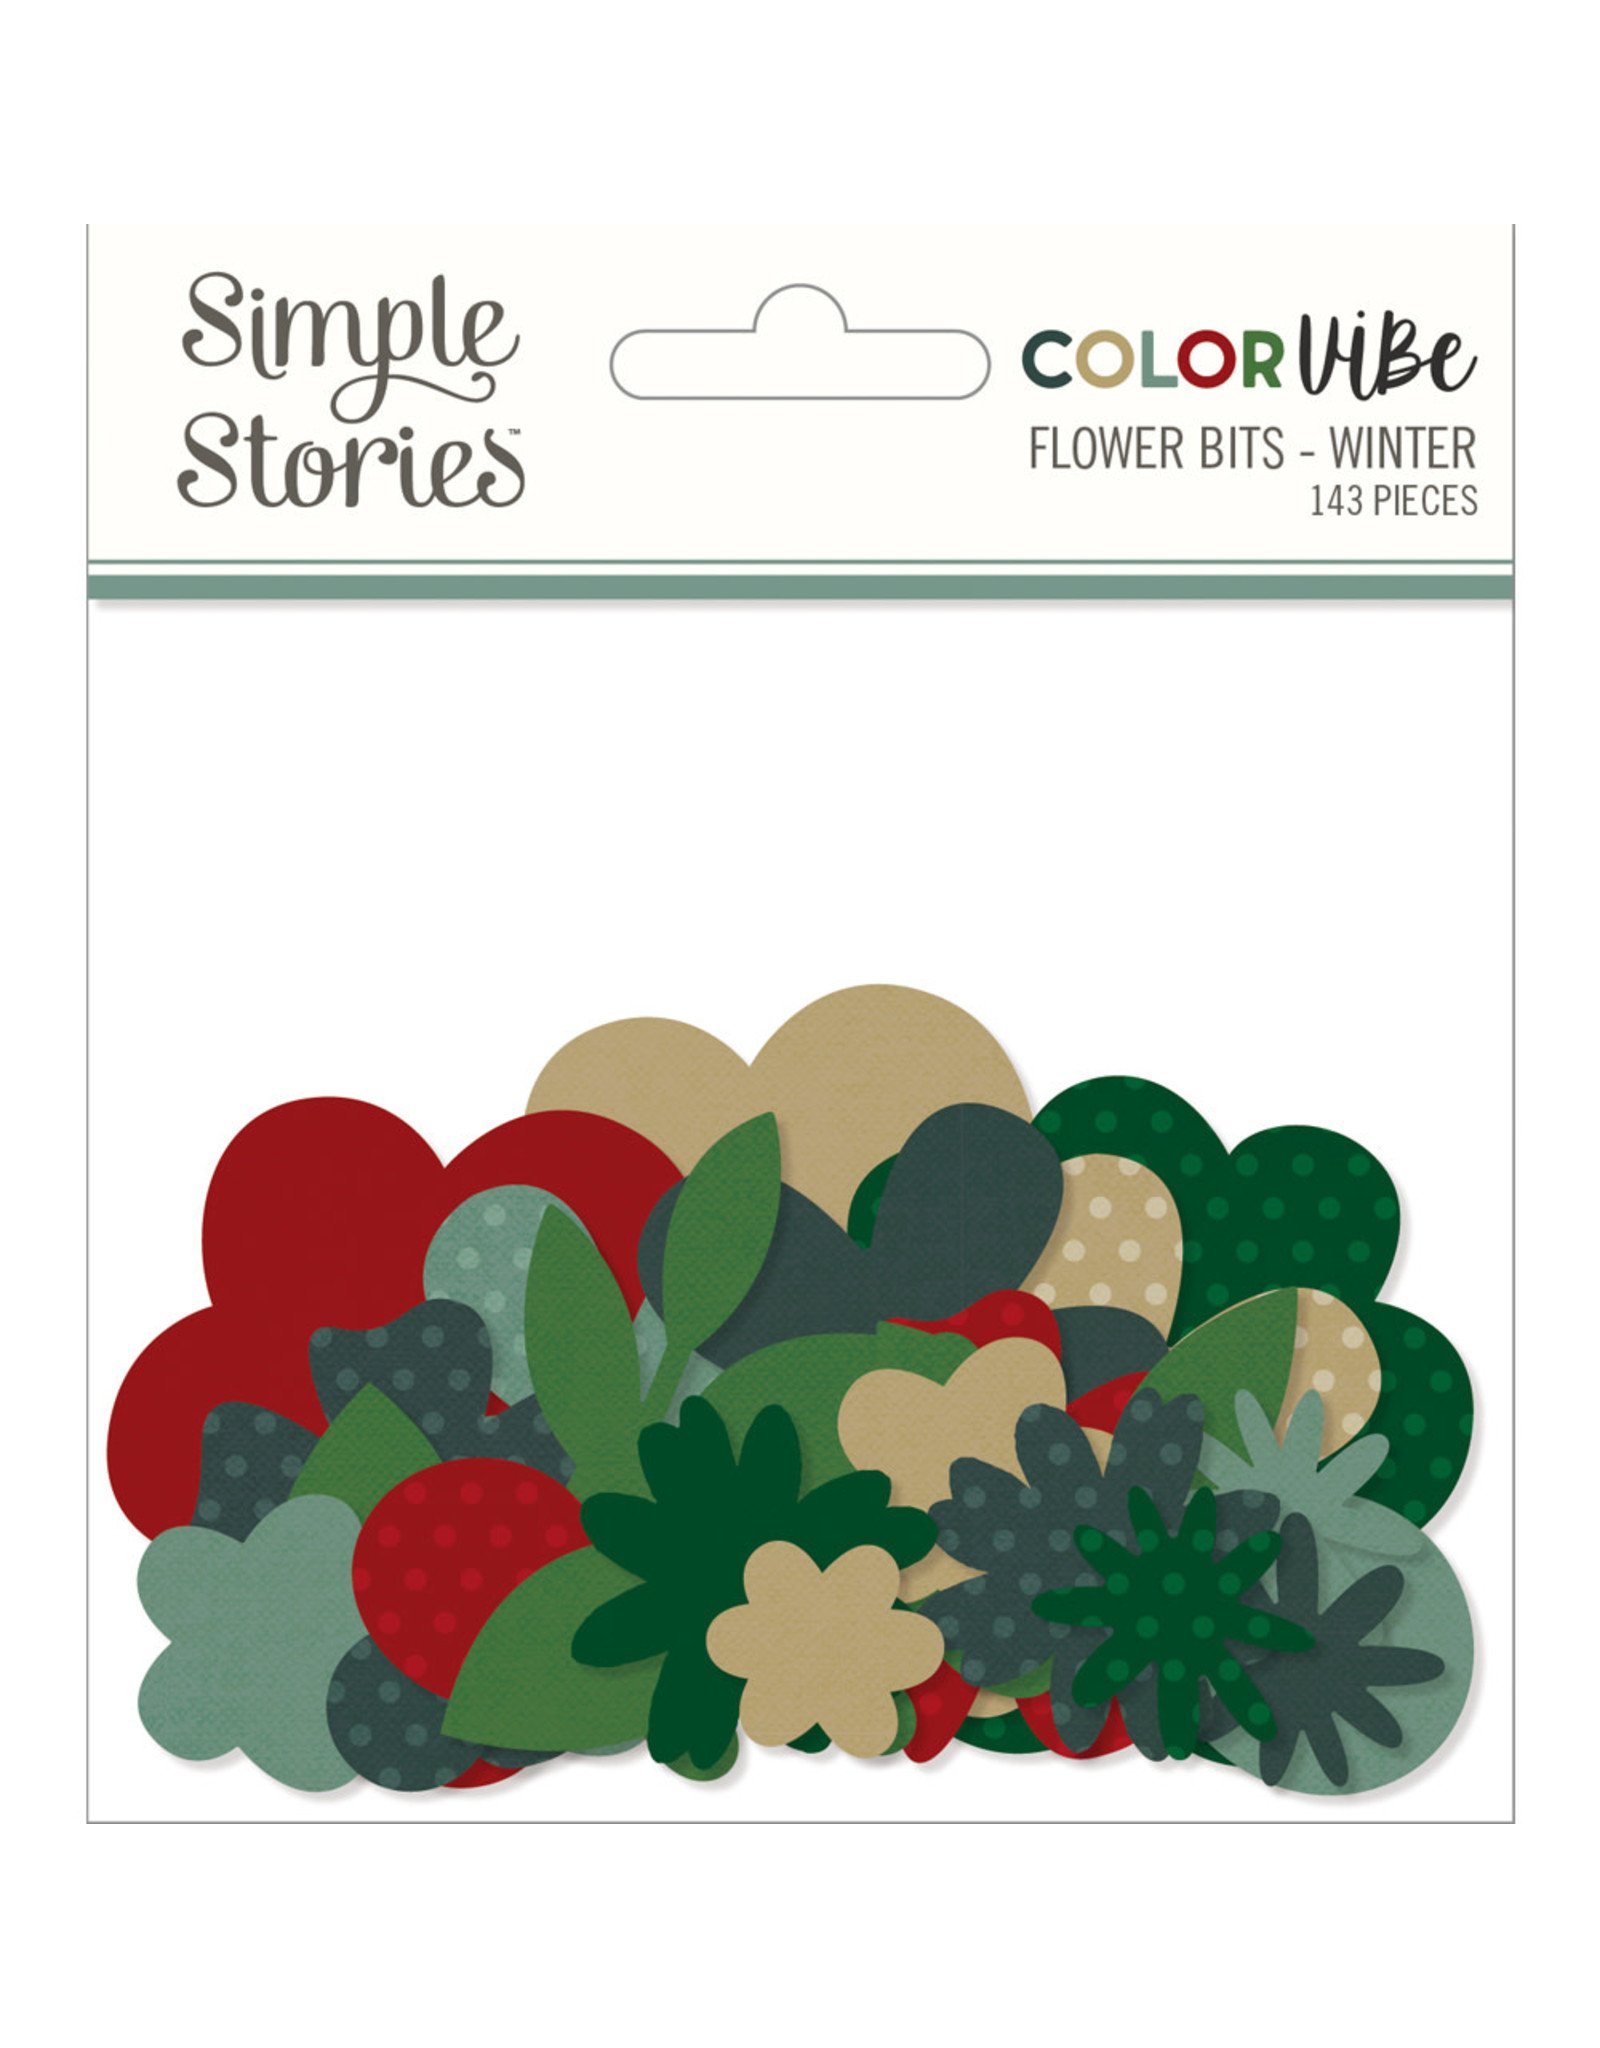 Simple Stories Color Vibe Flowers Bits & Pieces - Winter